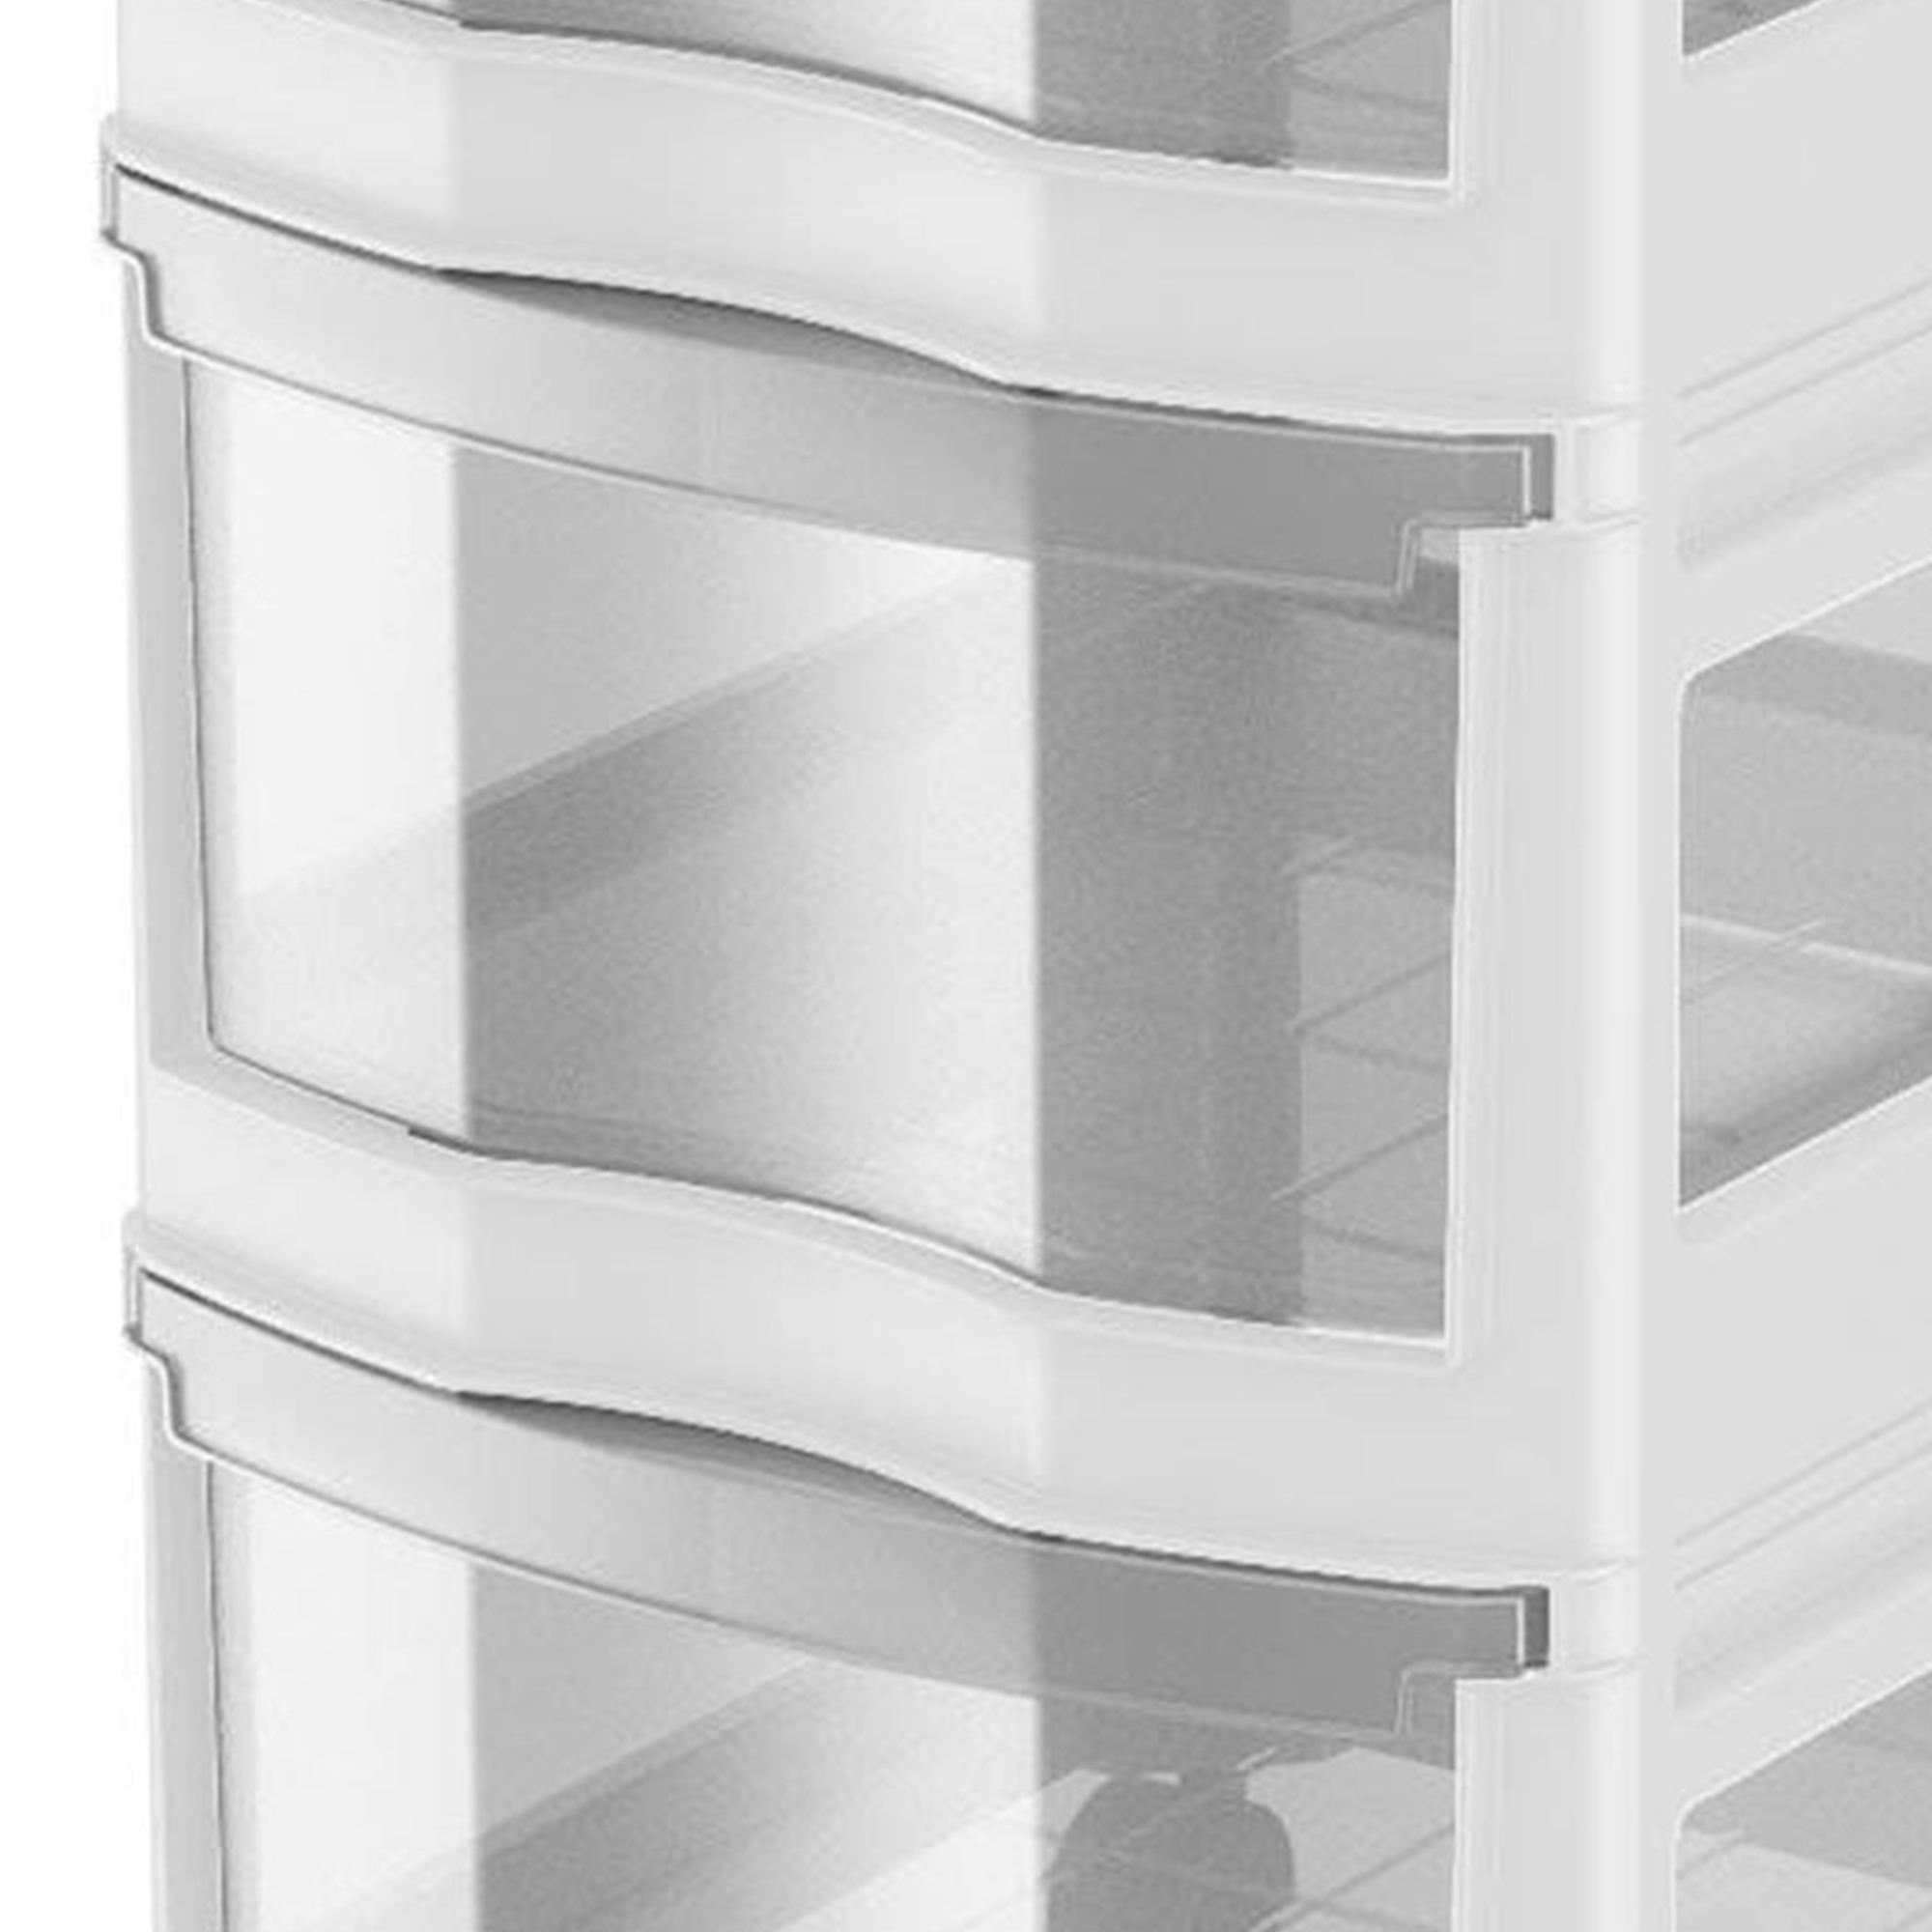 Life Story Classic White 3 Shelf Storage Container Organizer Plastic Drawers - image 4 of 7